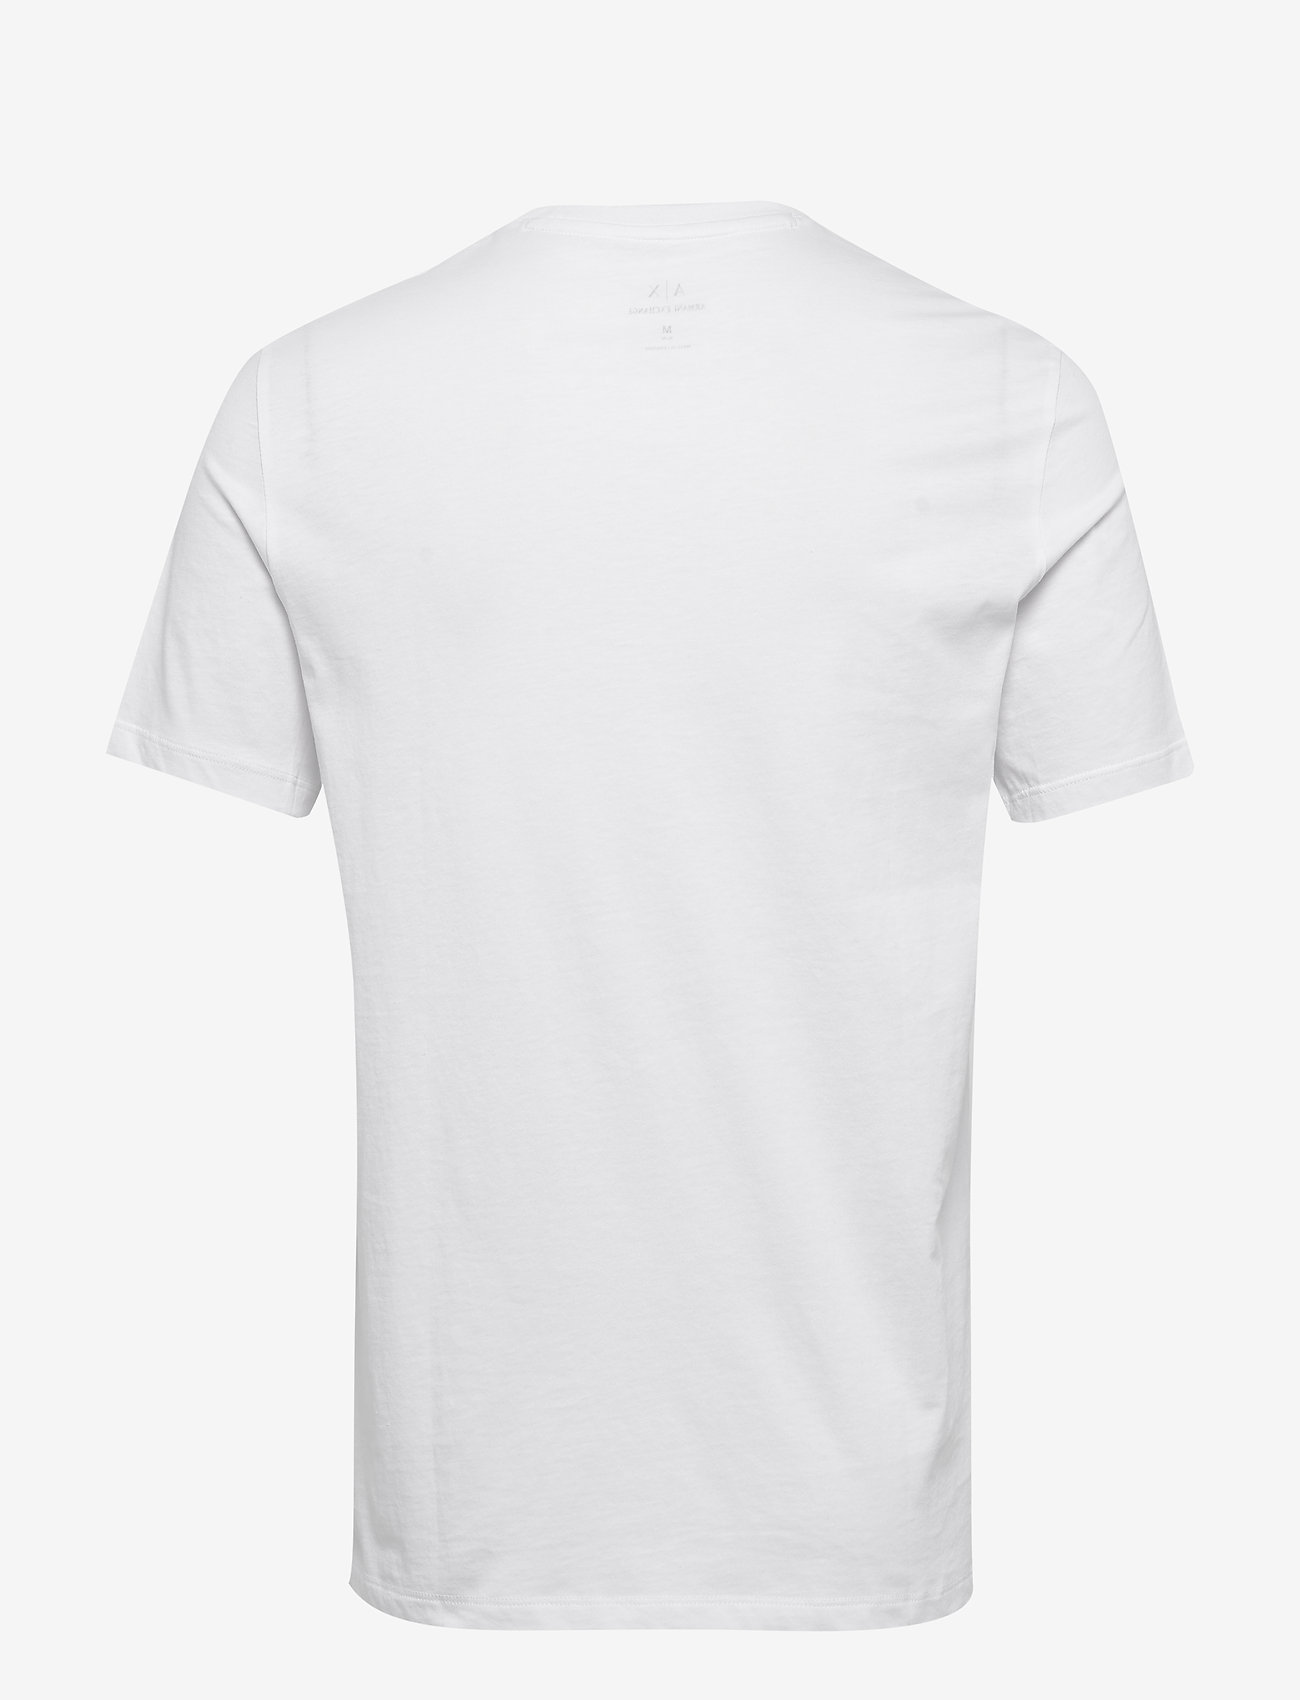 Armani Exchange - T-SHIRT - short-sleeved t-shirts - white - 1